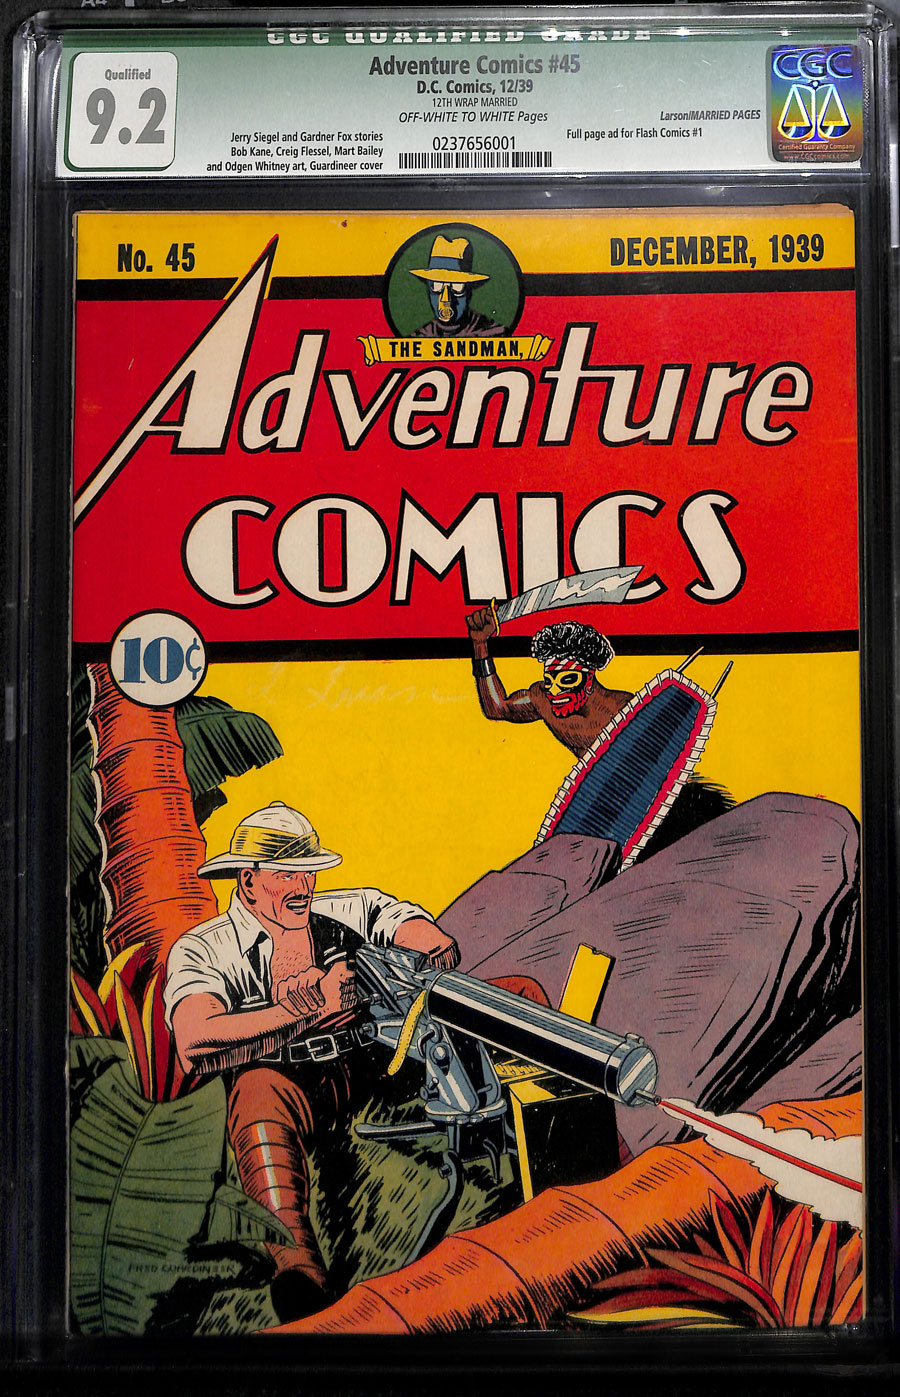 Bond Adventures комиксы. Gabo Comics 45.